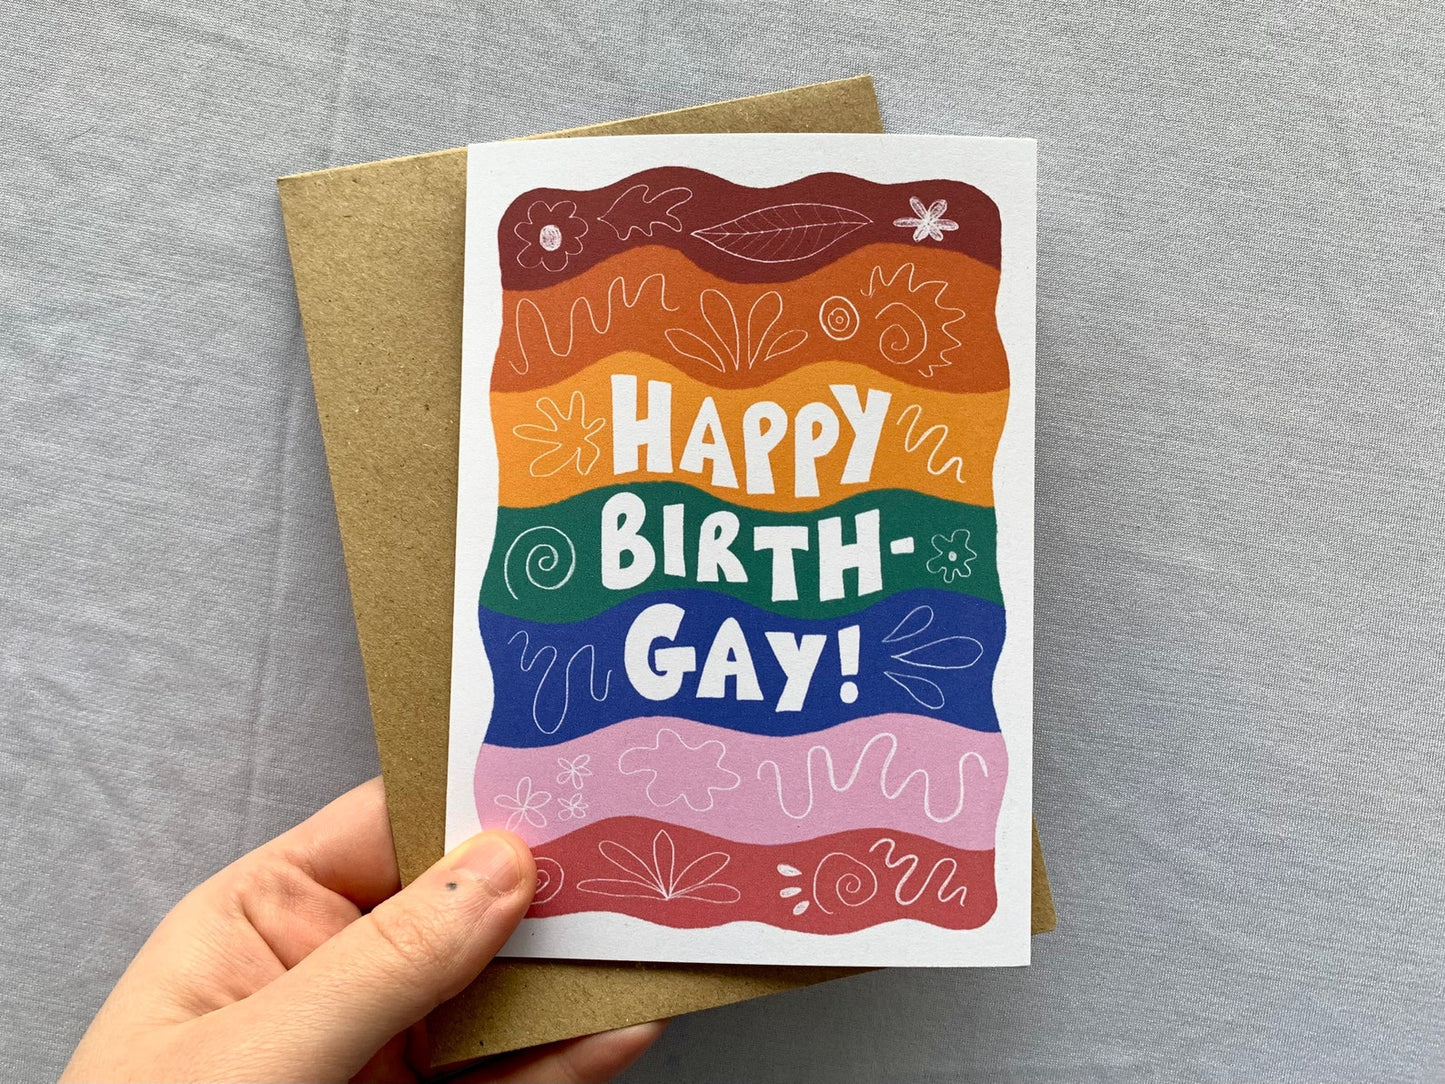 Birth-gay card